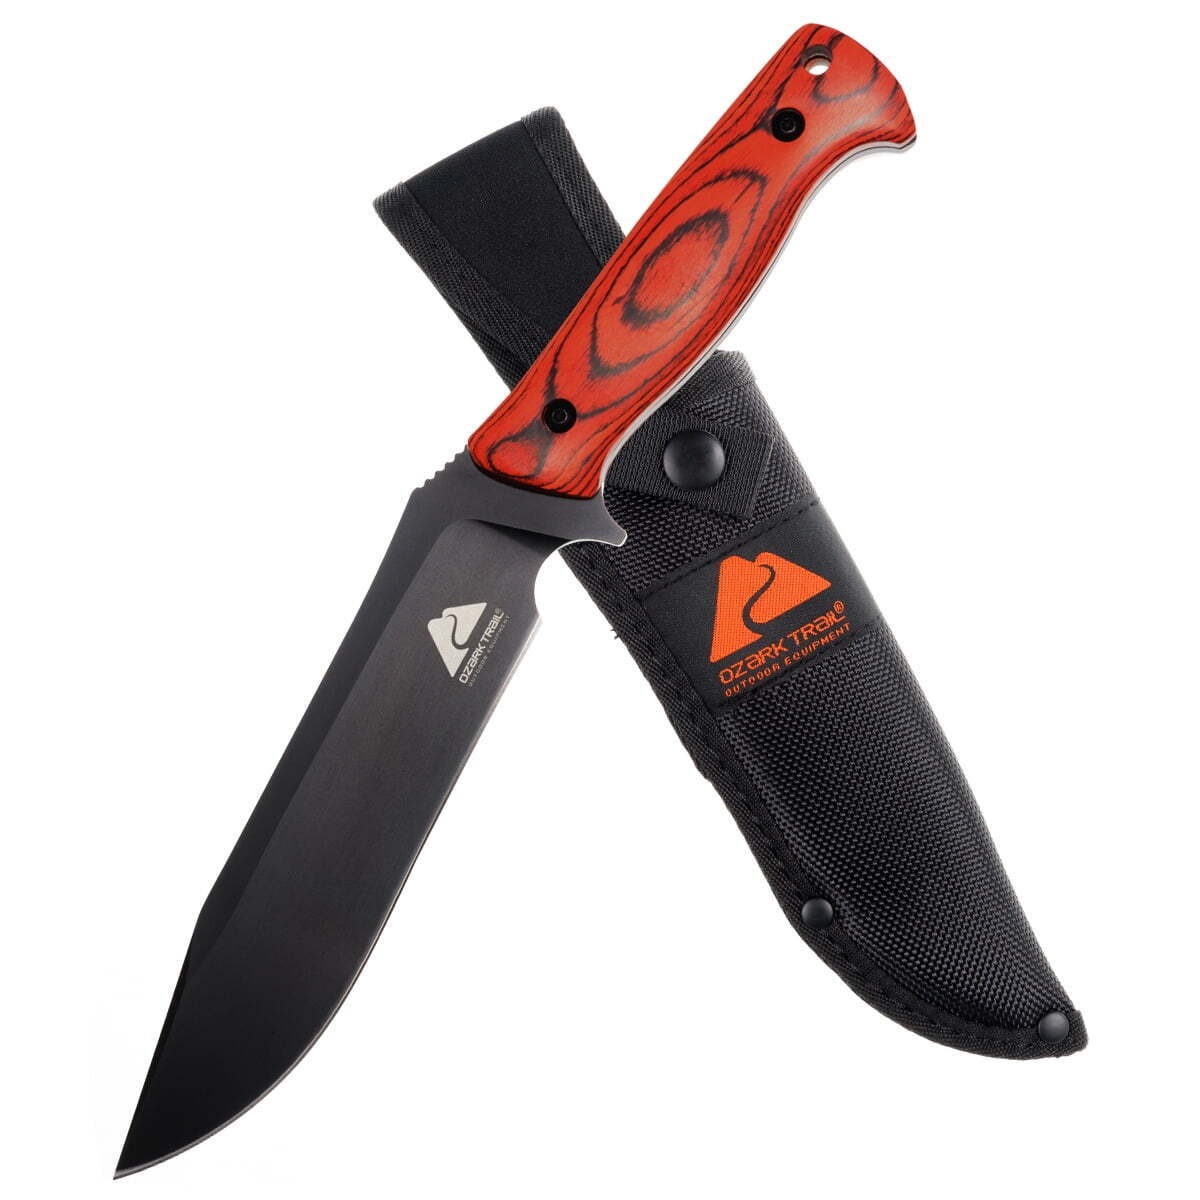 Ozark Trail Handle, 7Cr17MoV High Carbon Steel,11-inch Fixed Blade Knife